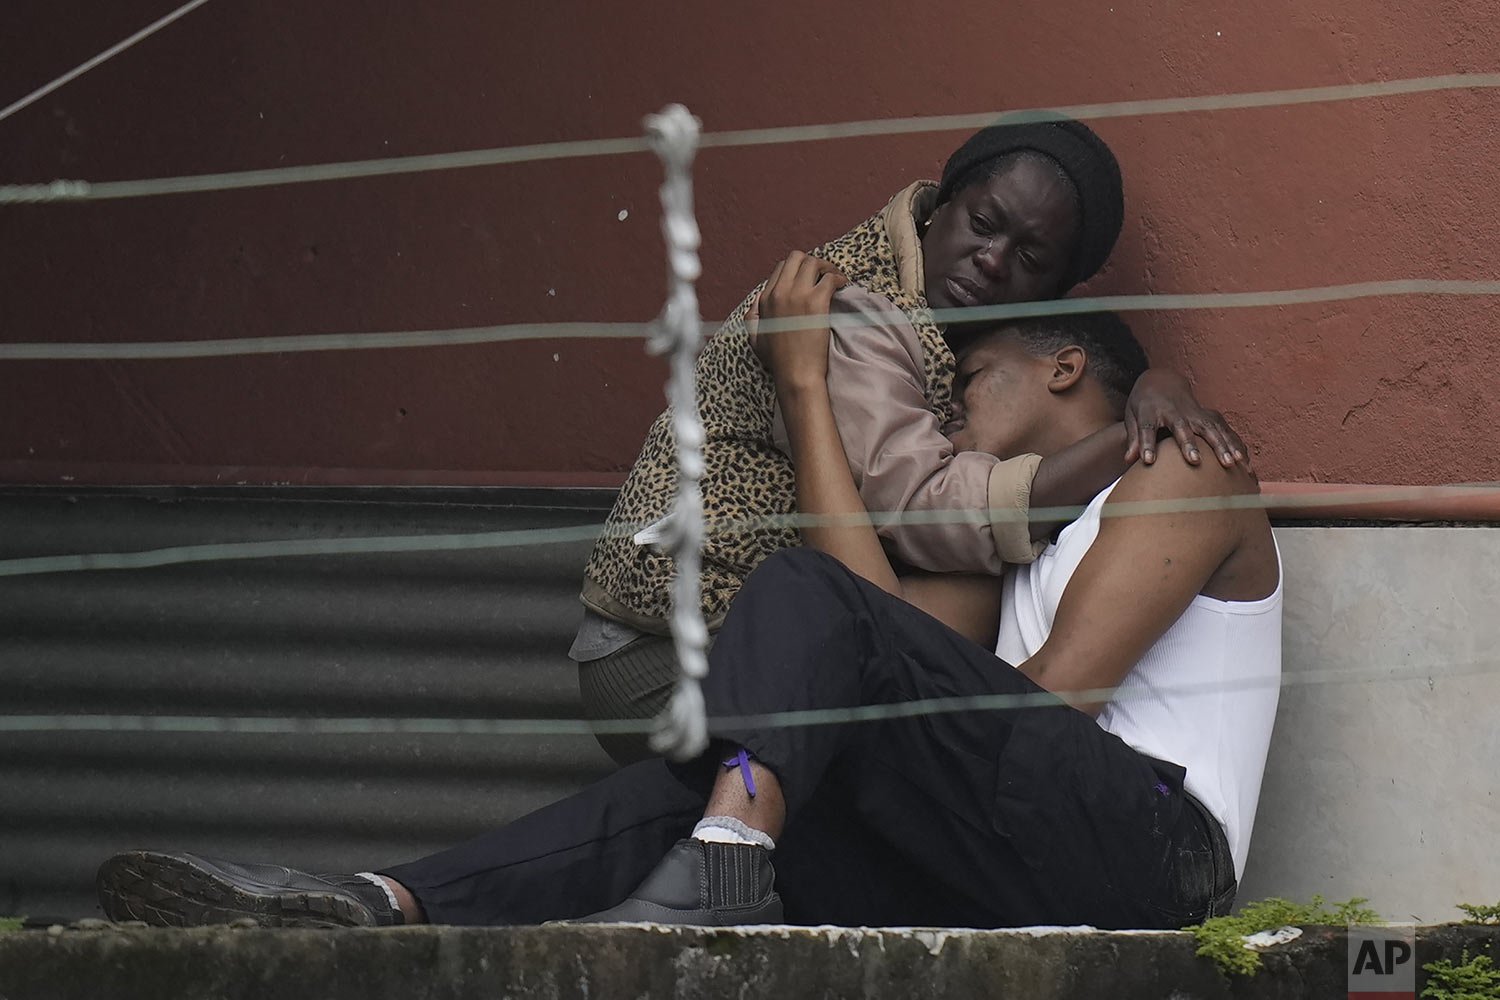  A woman embraces a youth after fatal mudslides in Petropolis, Brazil, Feb. 16, 2022. (AP Photo/Silvia Izquierdo) 